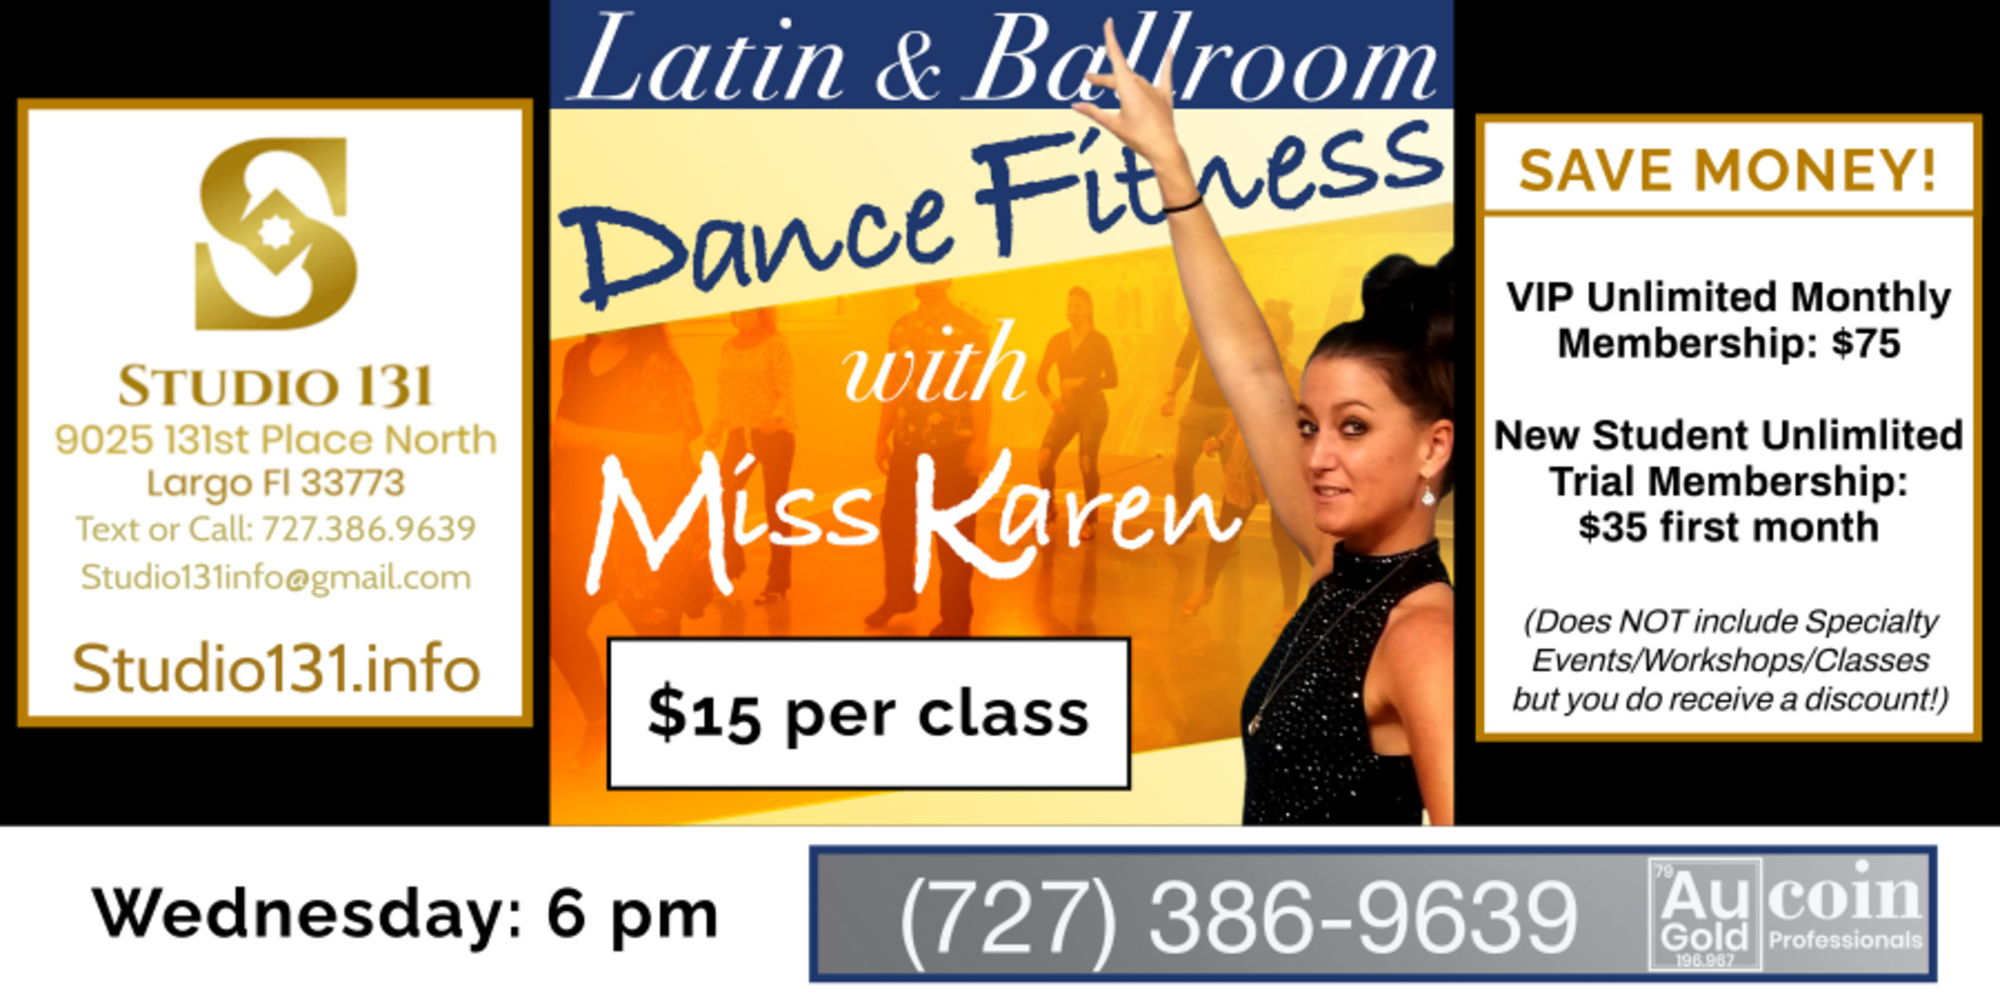 Latin & Ballroom Dance Fitness with Miss Karen promotional image